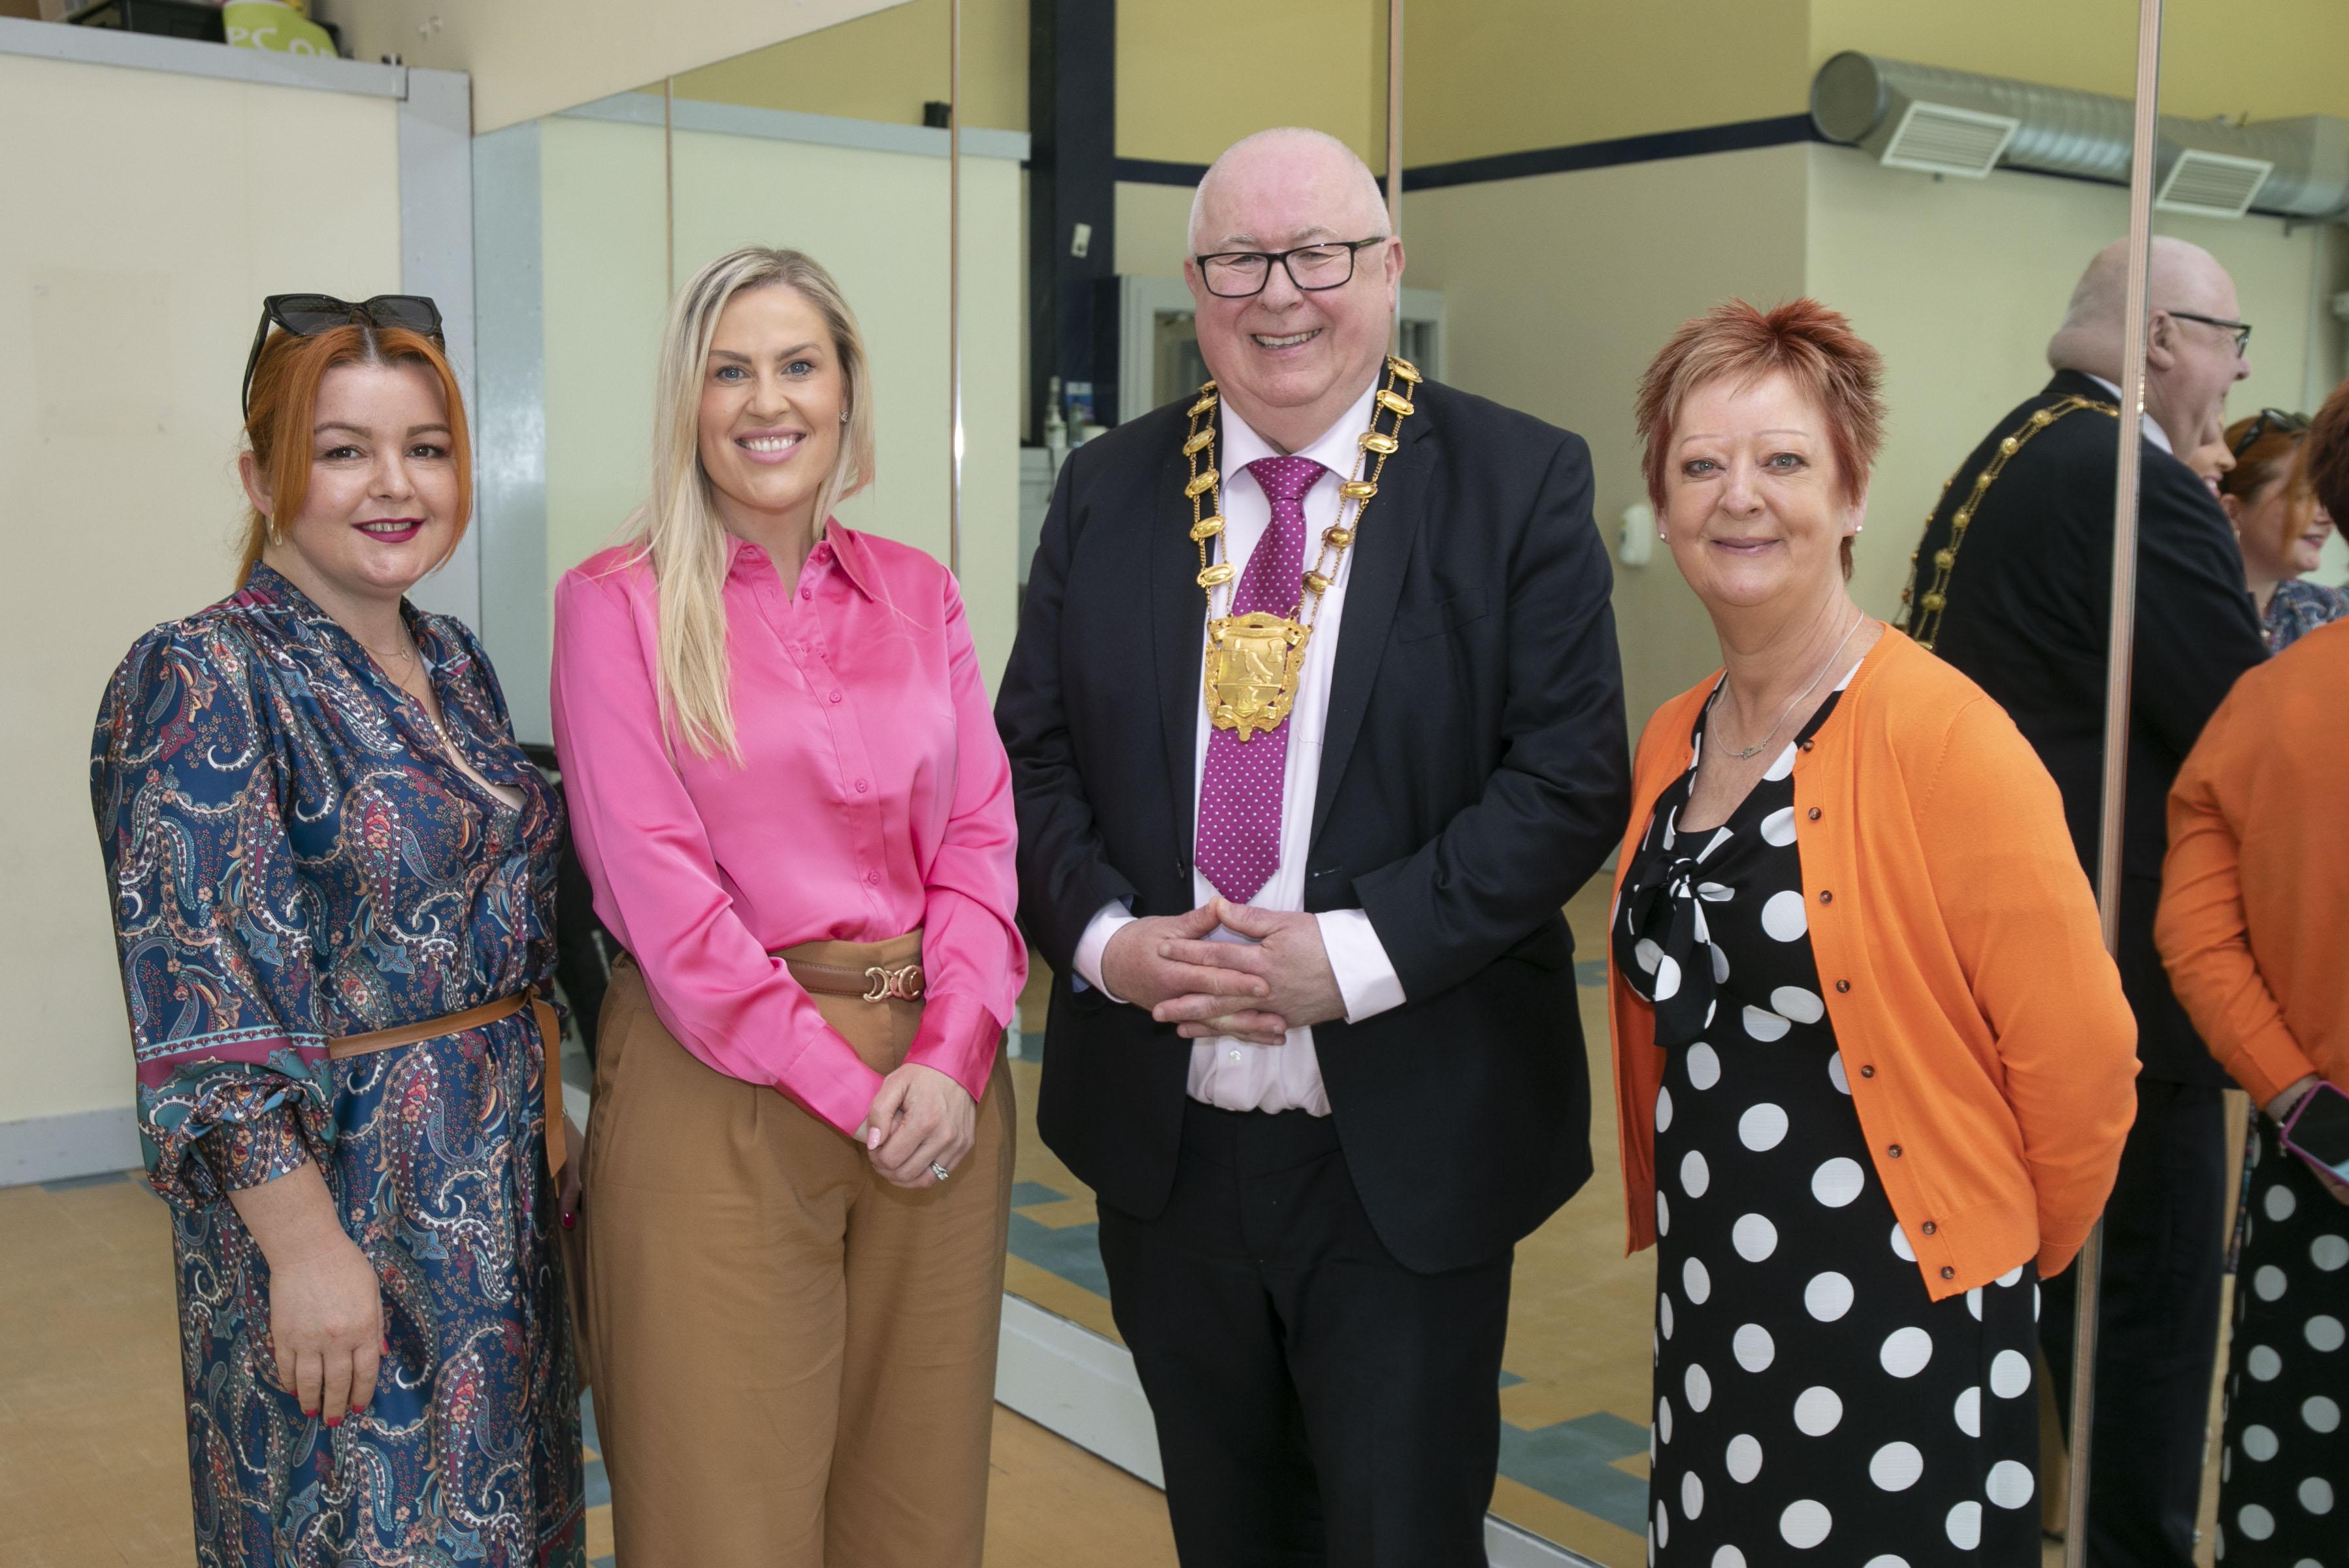 Mayor of Fingal Cllr Howard Mahony with Kelly Myrtaj, Women's Shed Clonee, Hazel McLoughlin, Chairperson, Women's Shed Clonee and Cllr Tania Doyle (right)